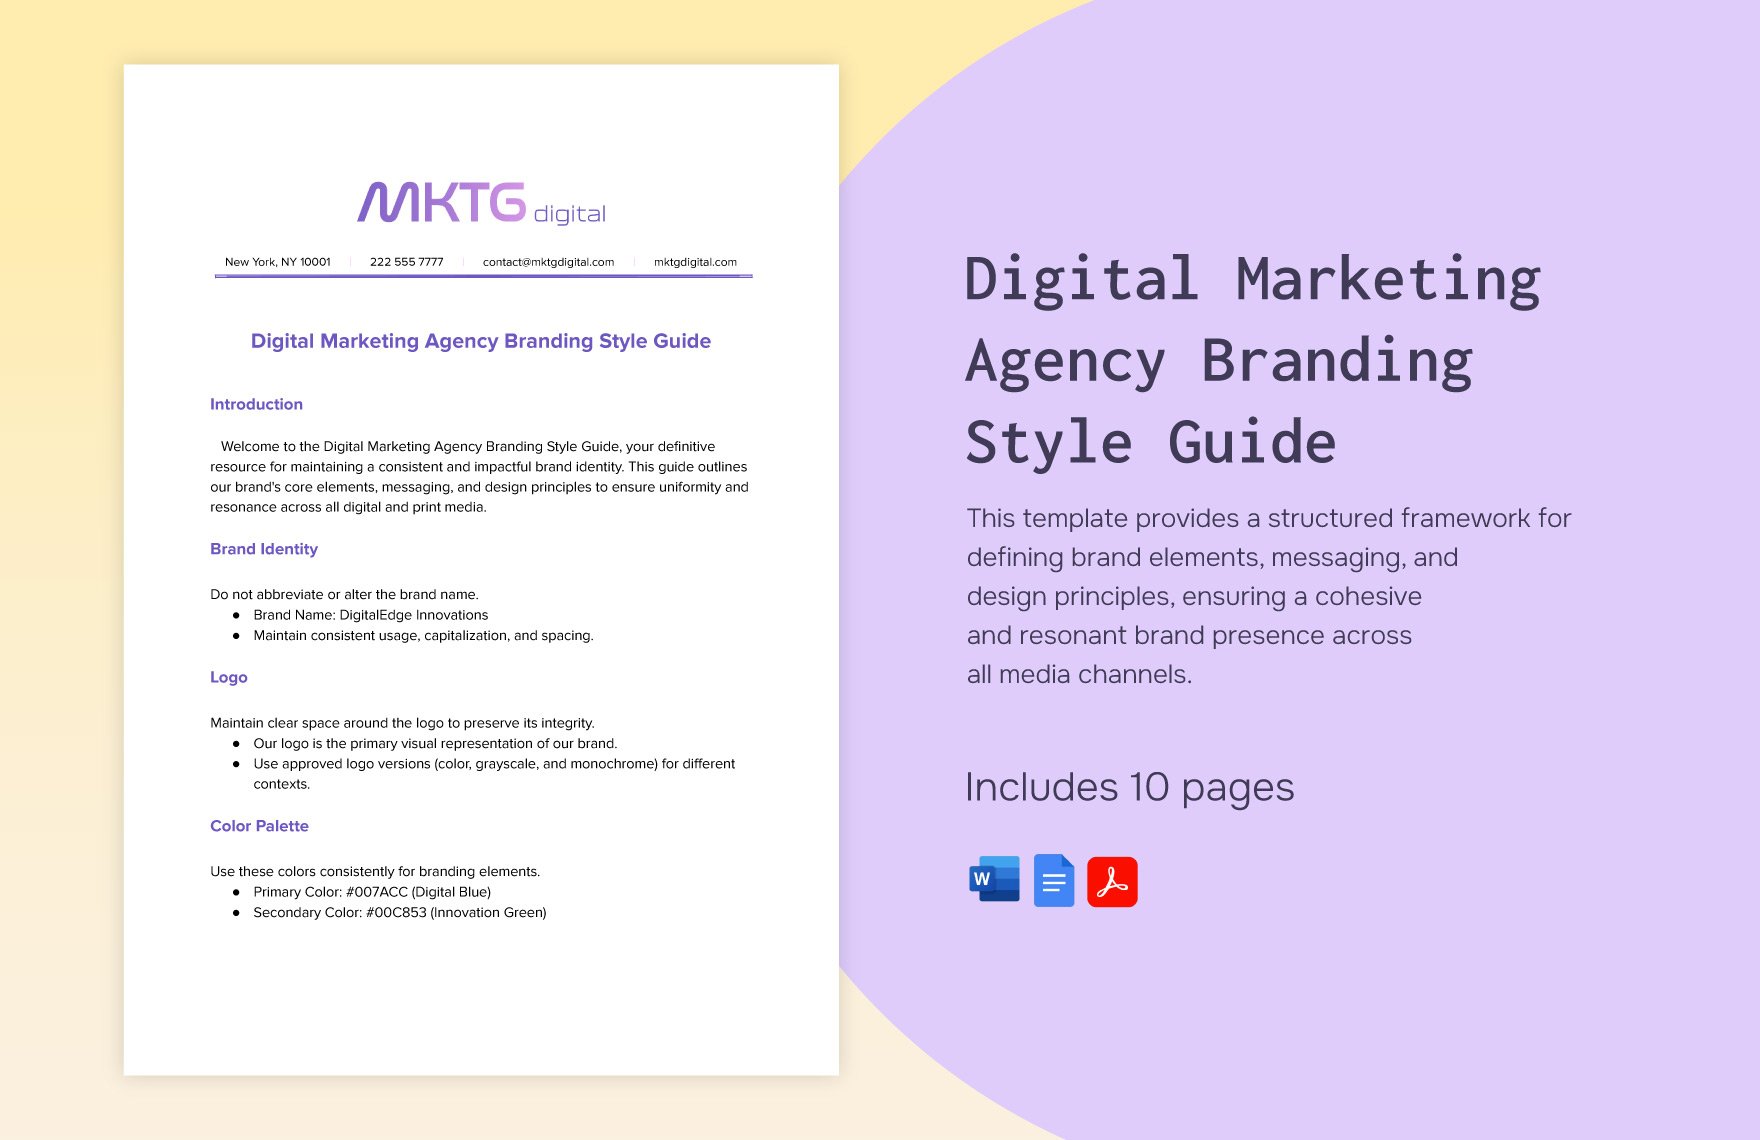 Digital Marketing Agency Branding Style Guide Template